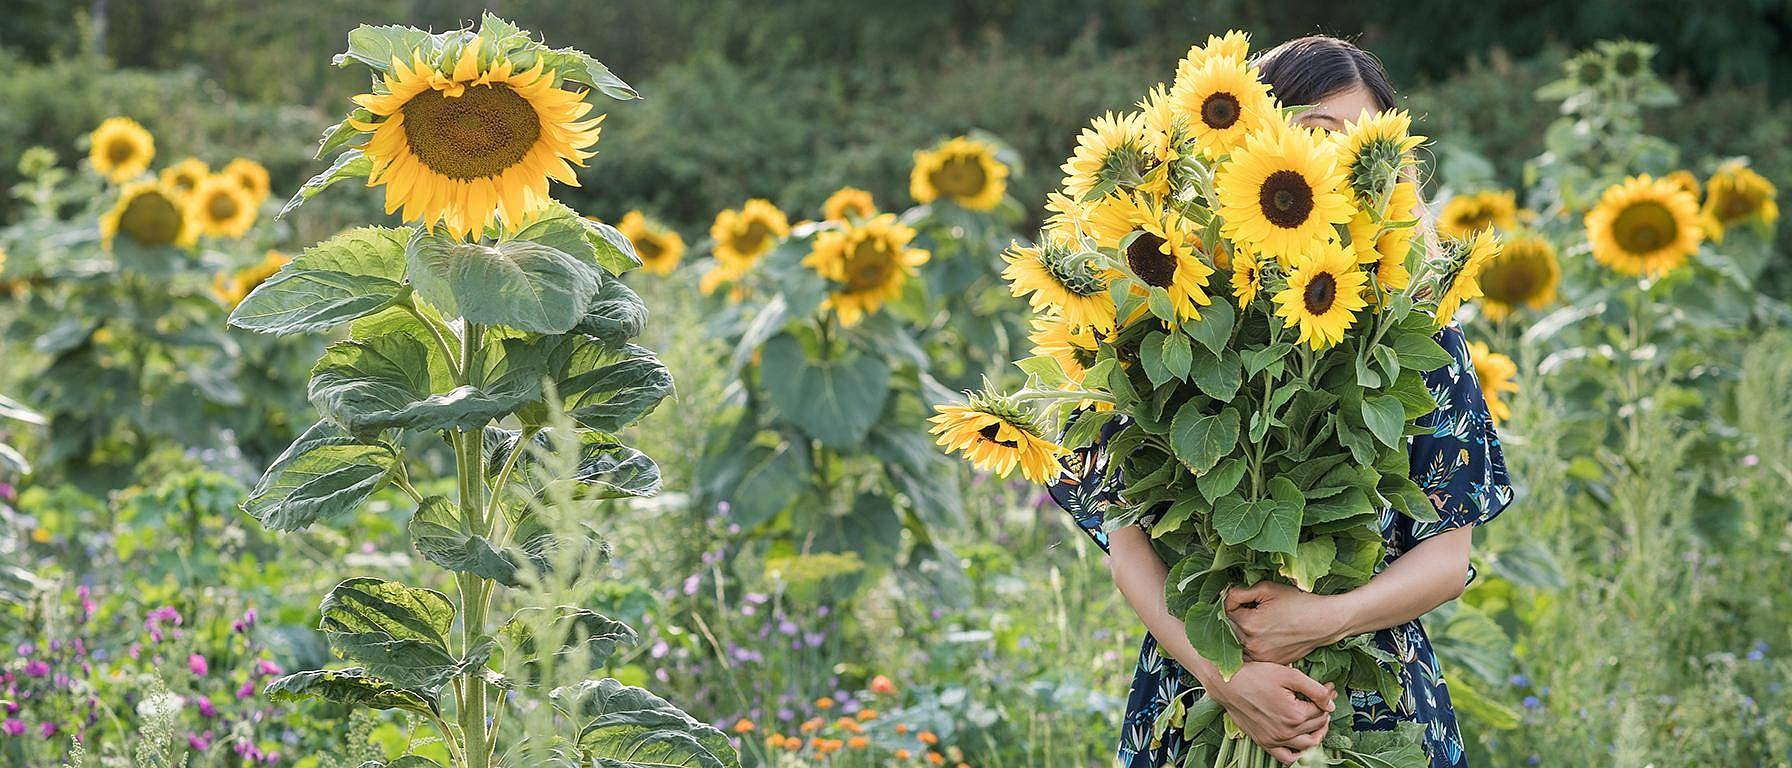 Lady holding sunflower